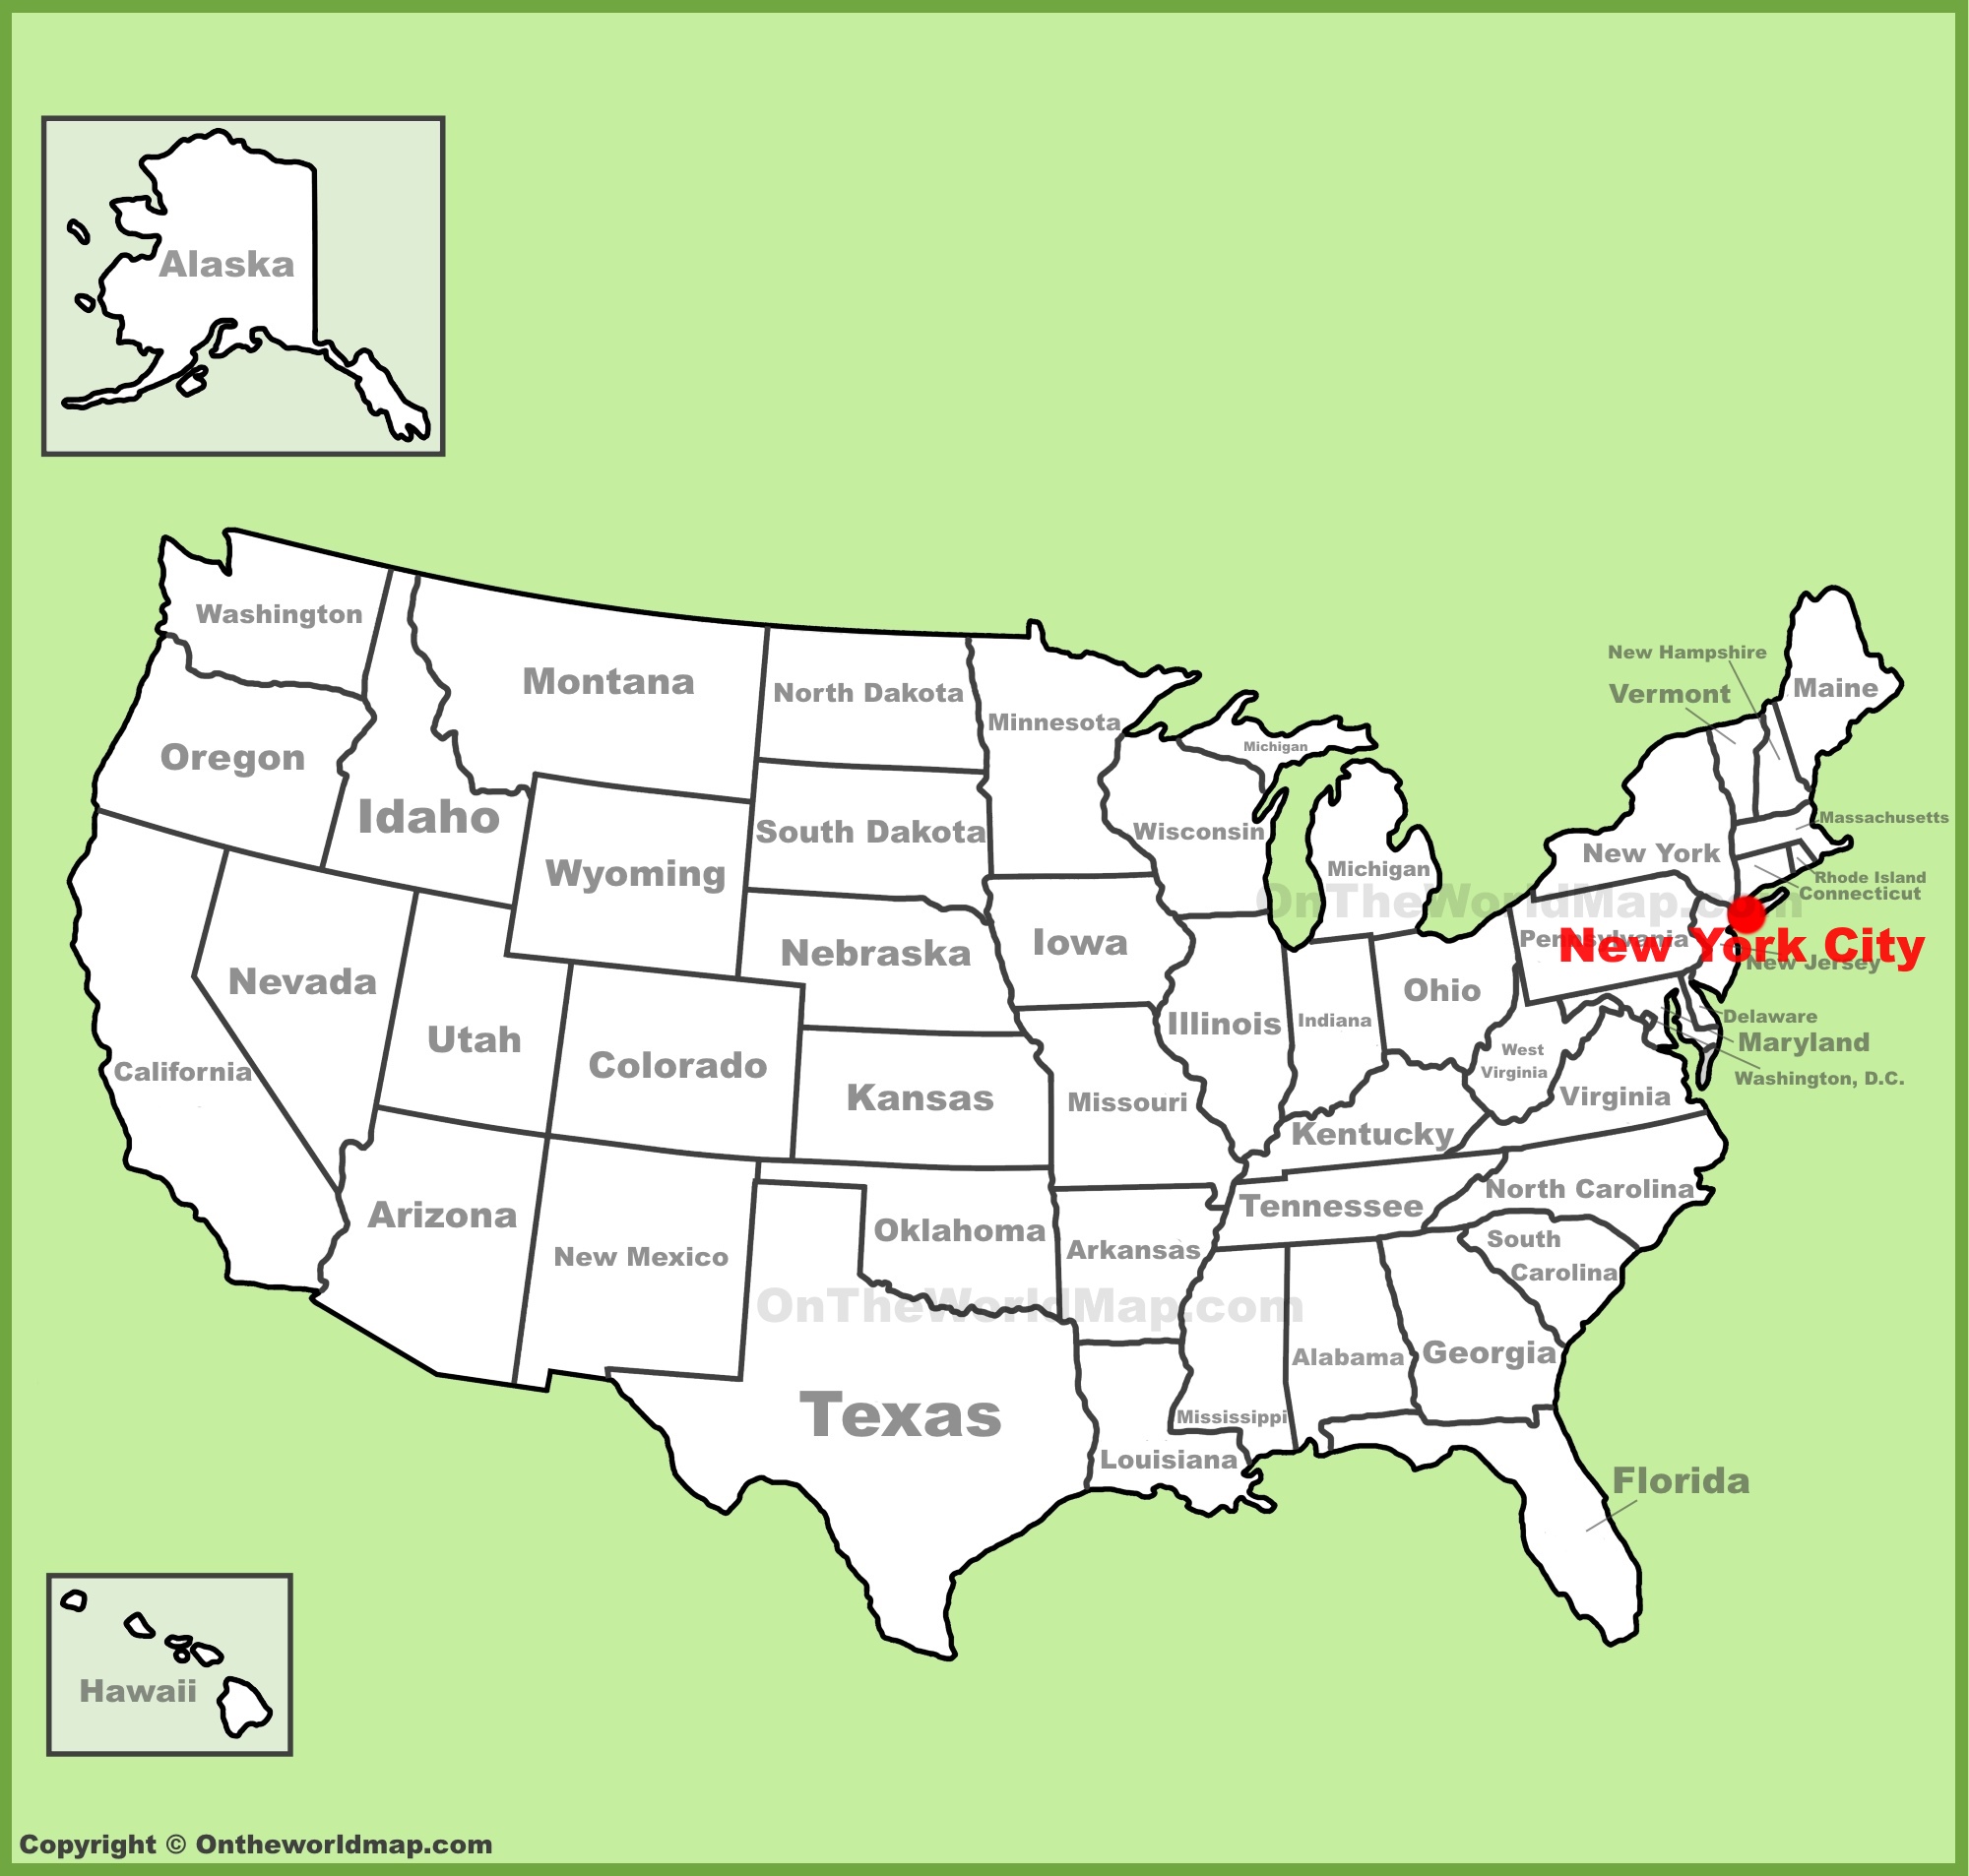 New York City location on the U.S. Map